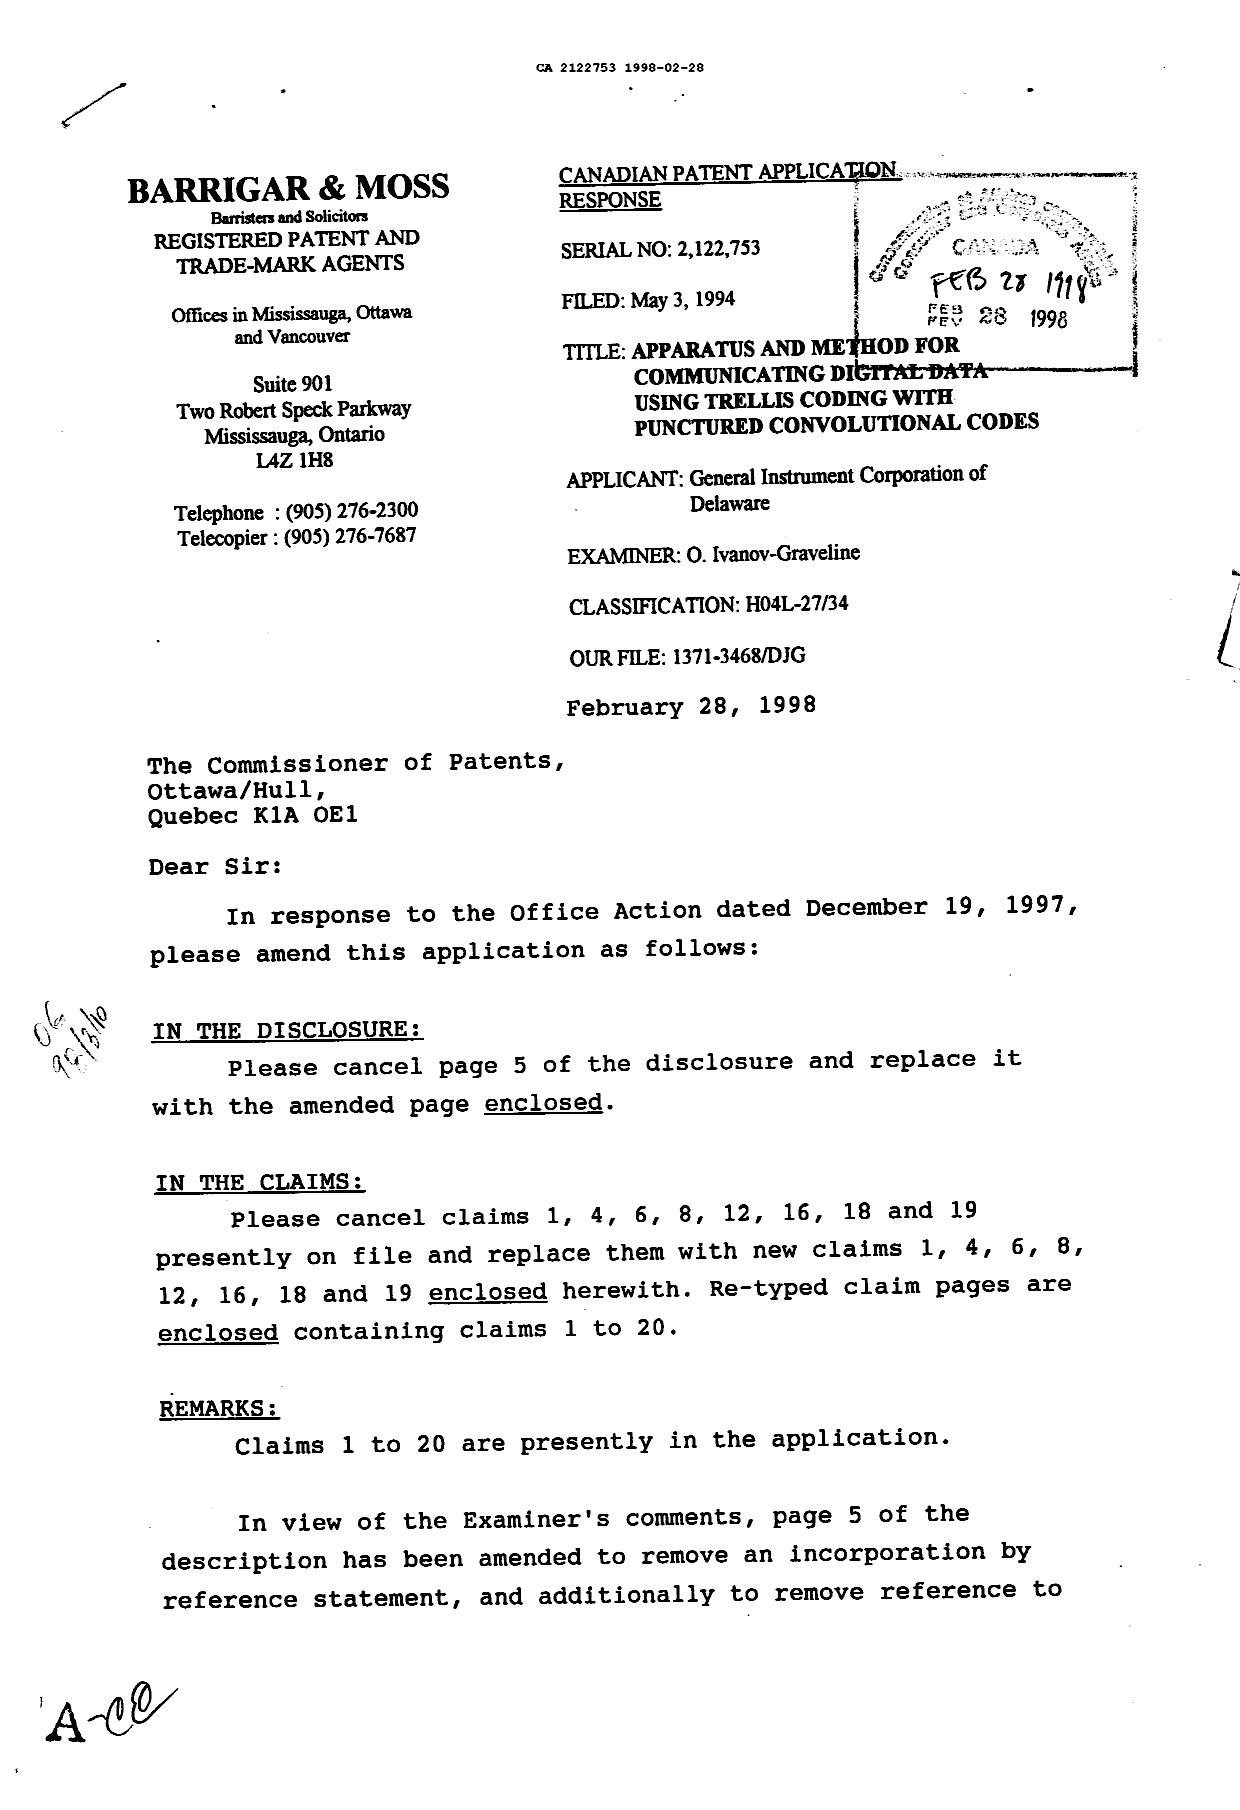 Canadian Patent Document 2122753. Prosecution Correspondence 19980228. Image 1 of 2